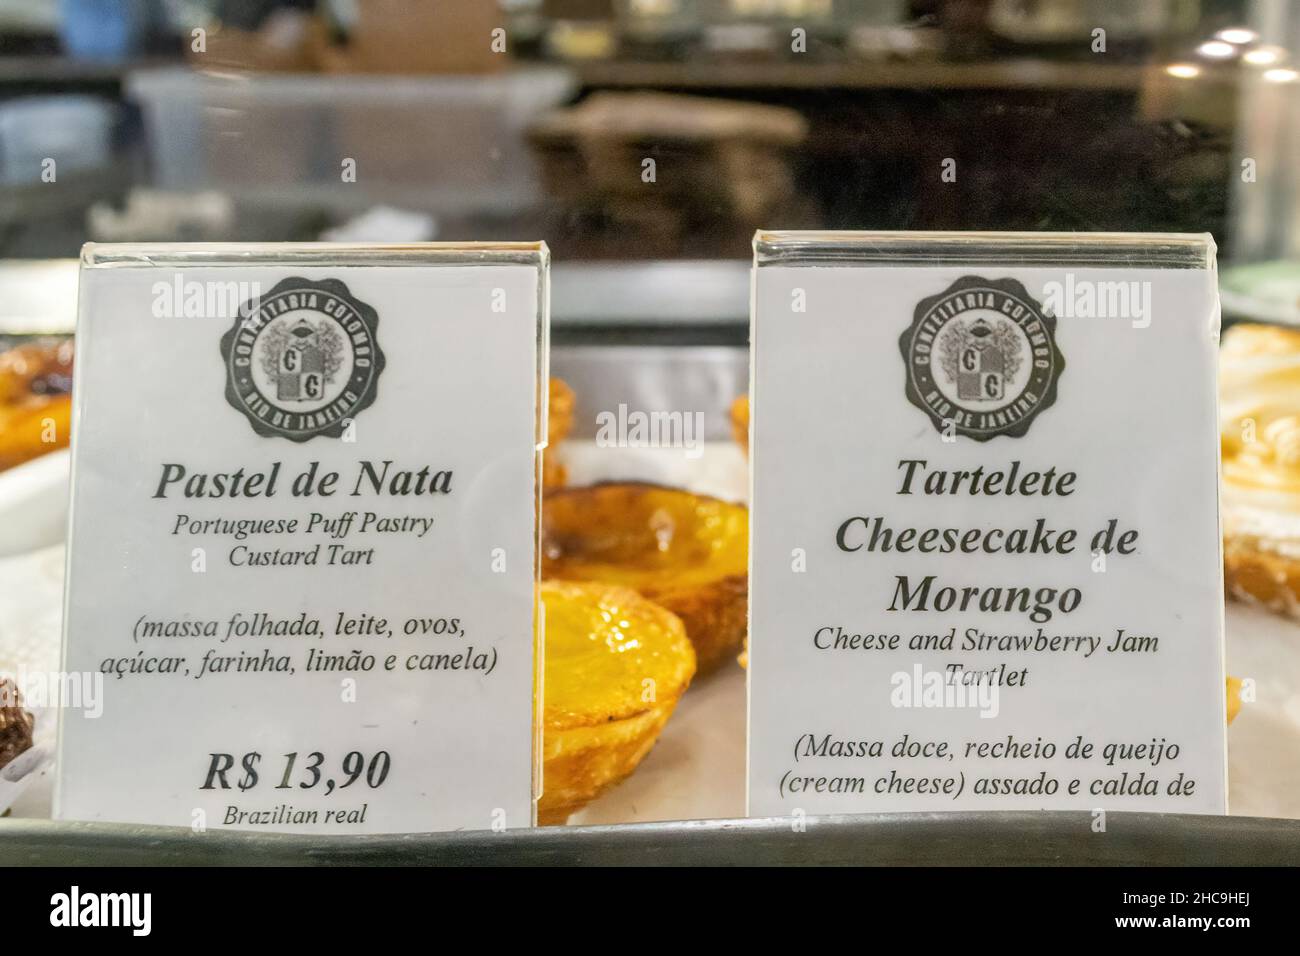 Im Inneren des Colombo Confectionary Business, Rio de Janeiro, Brasilien Stockfoto